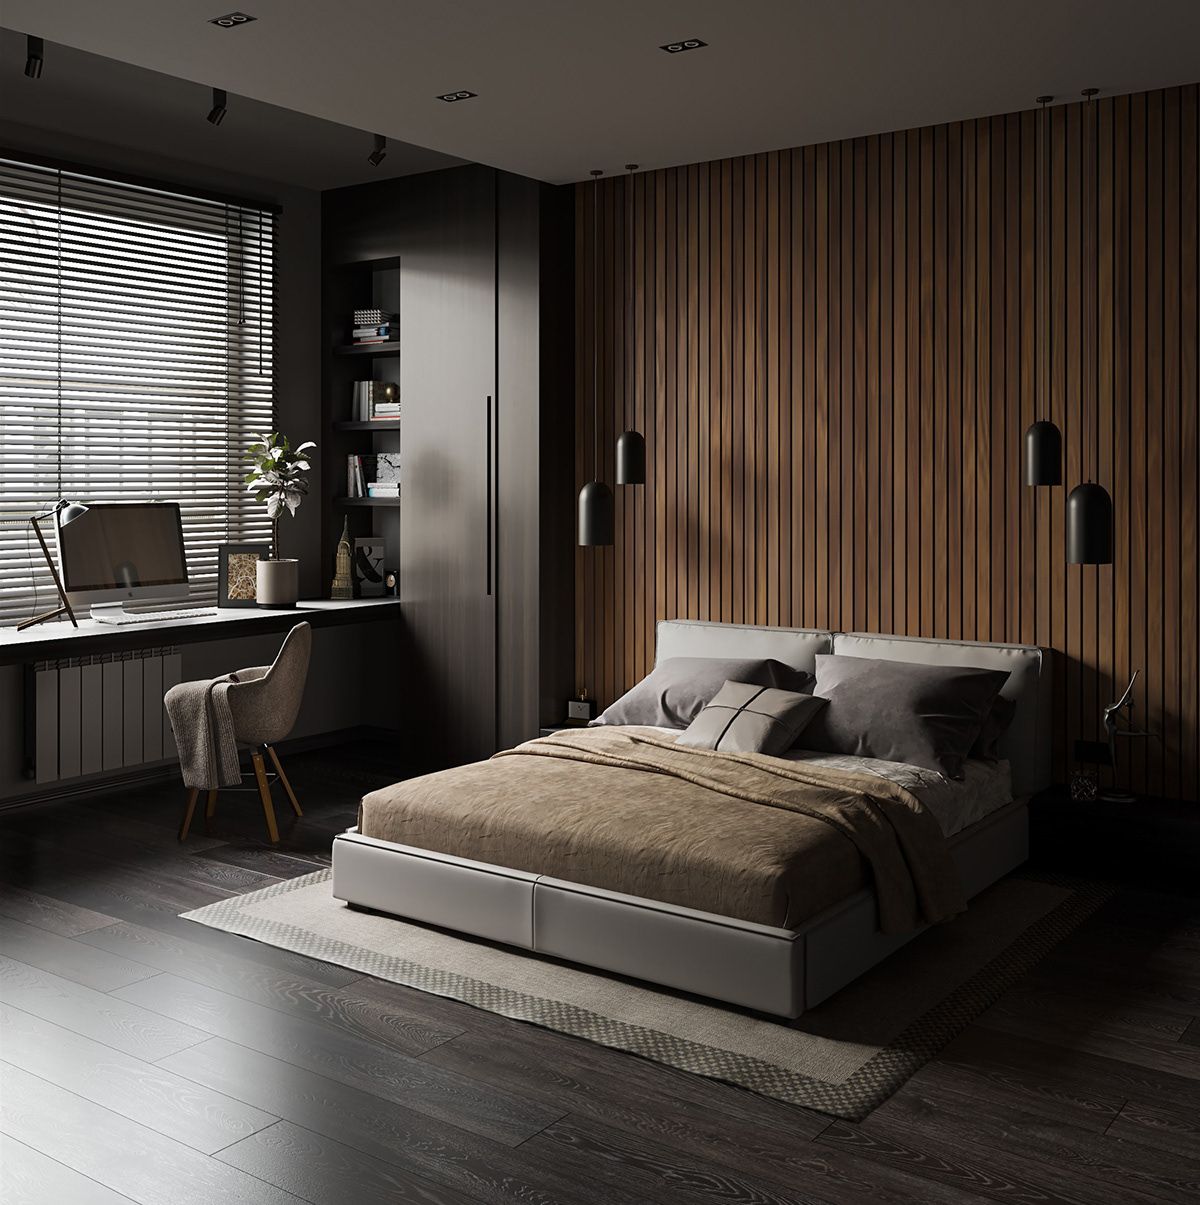 Interior design. Bedroom